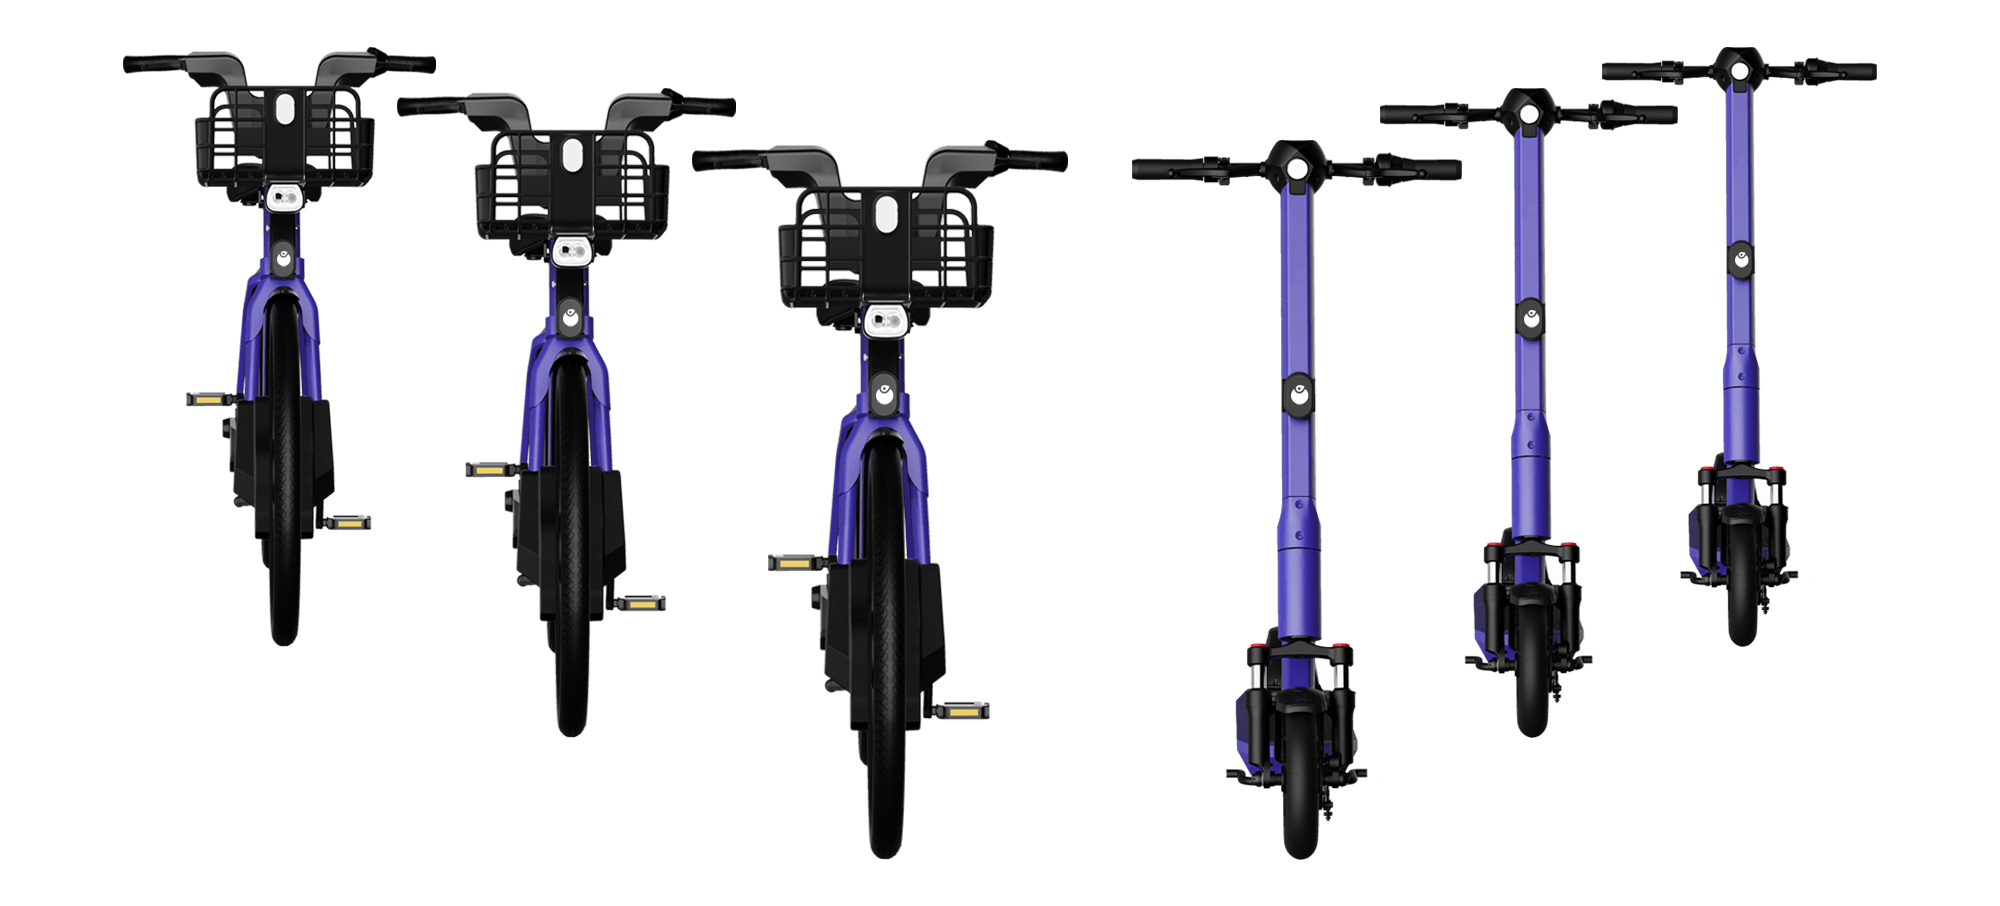 Plum's e-bike and e-scooter fleet